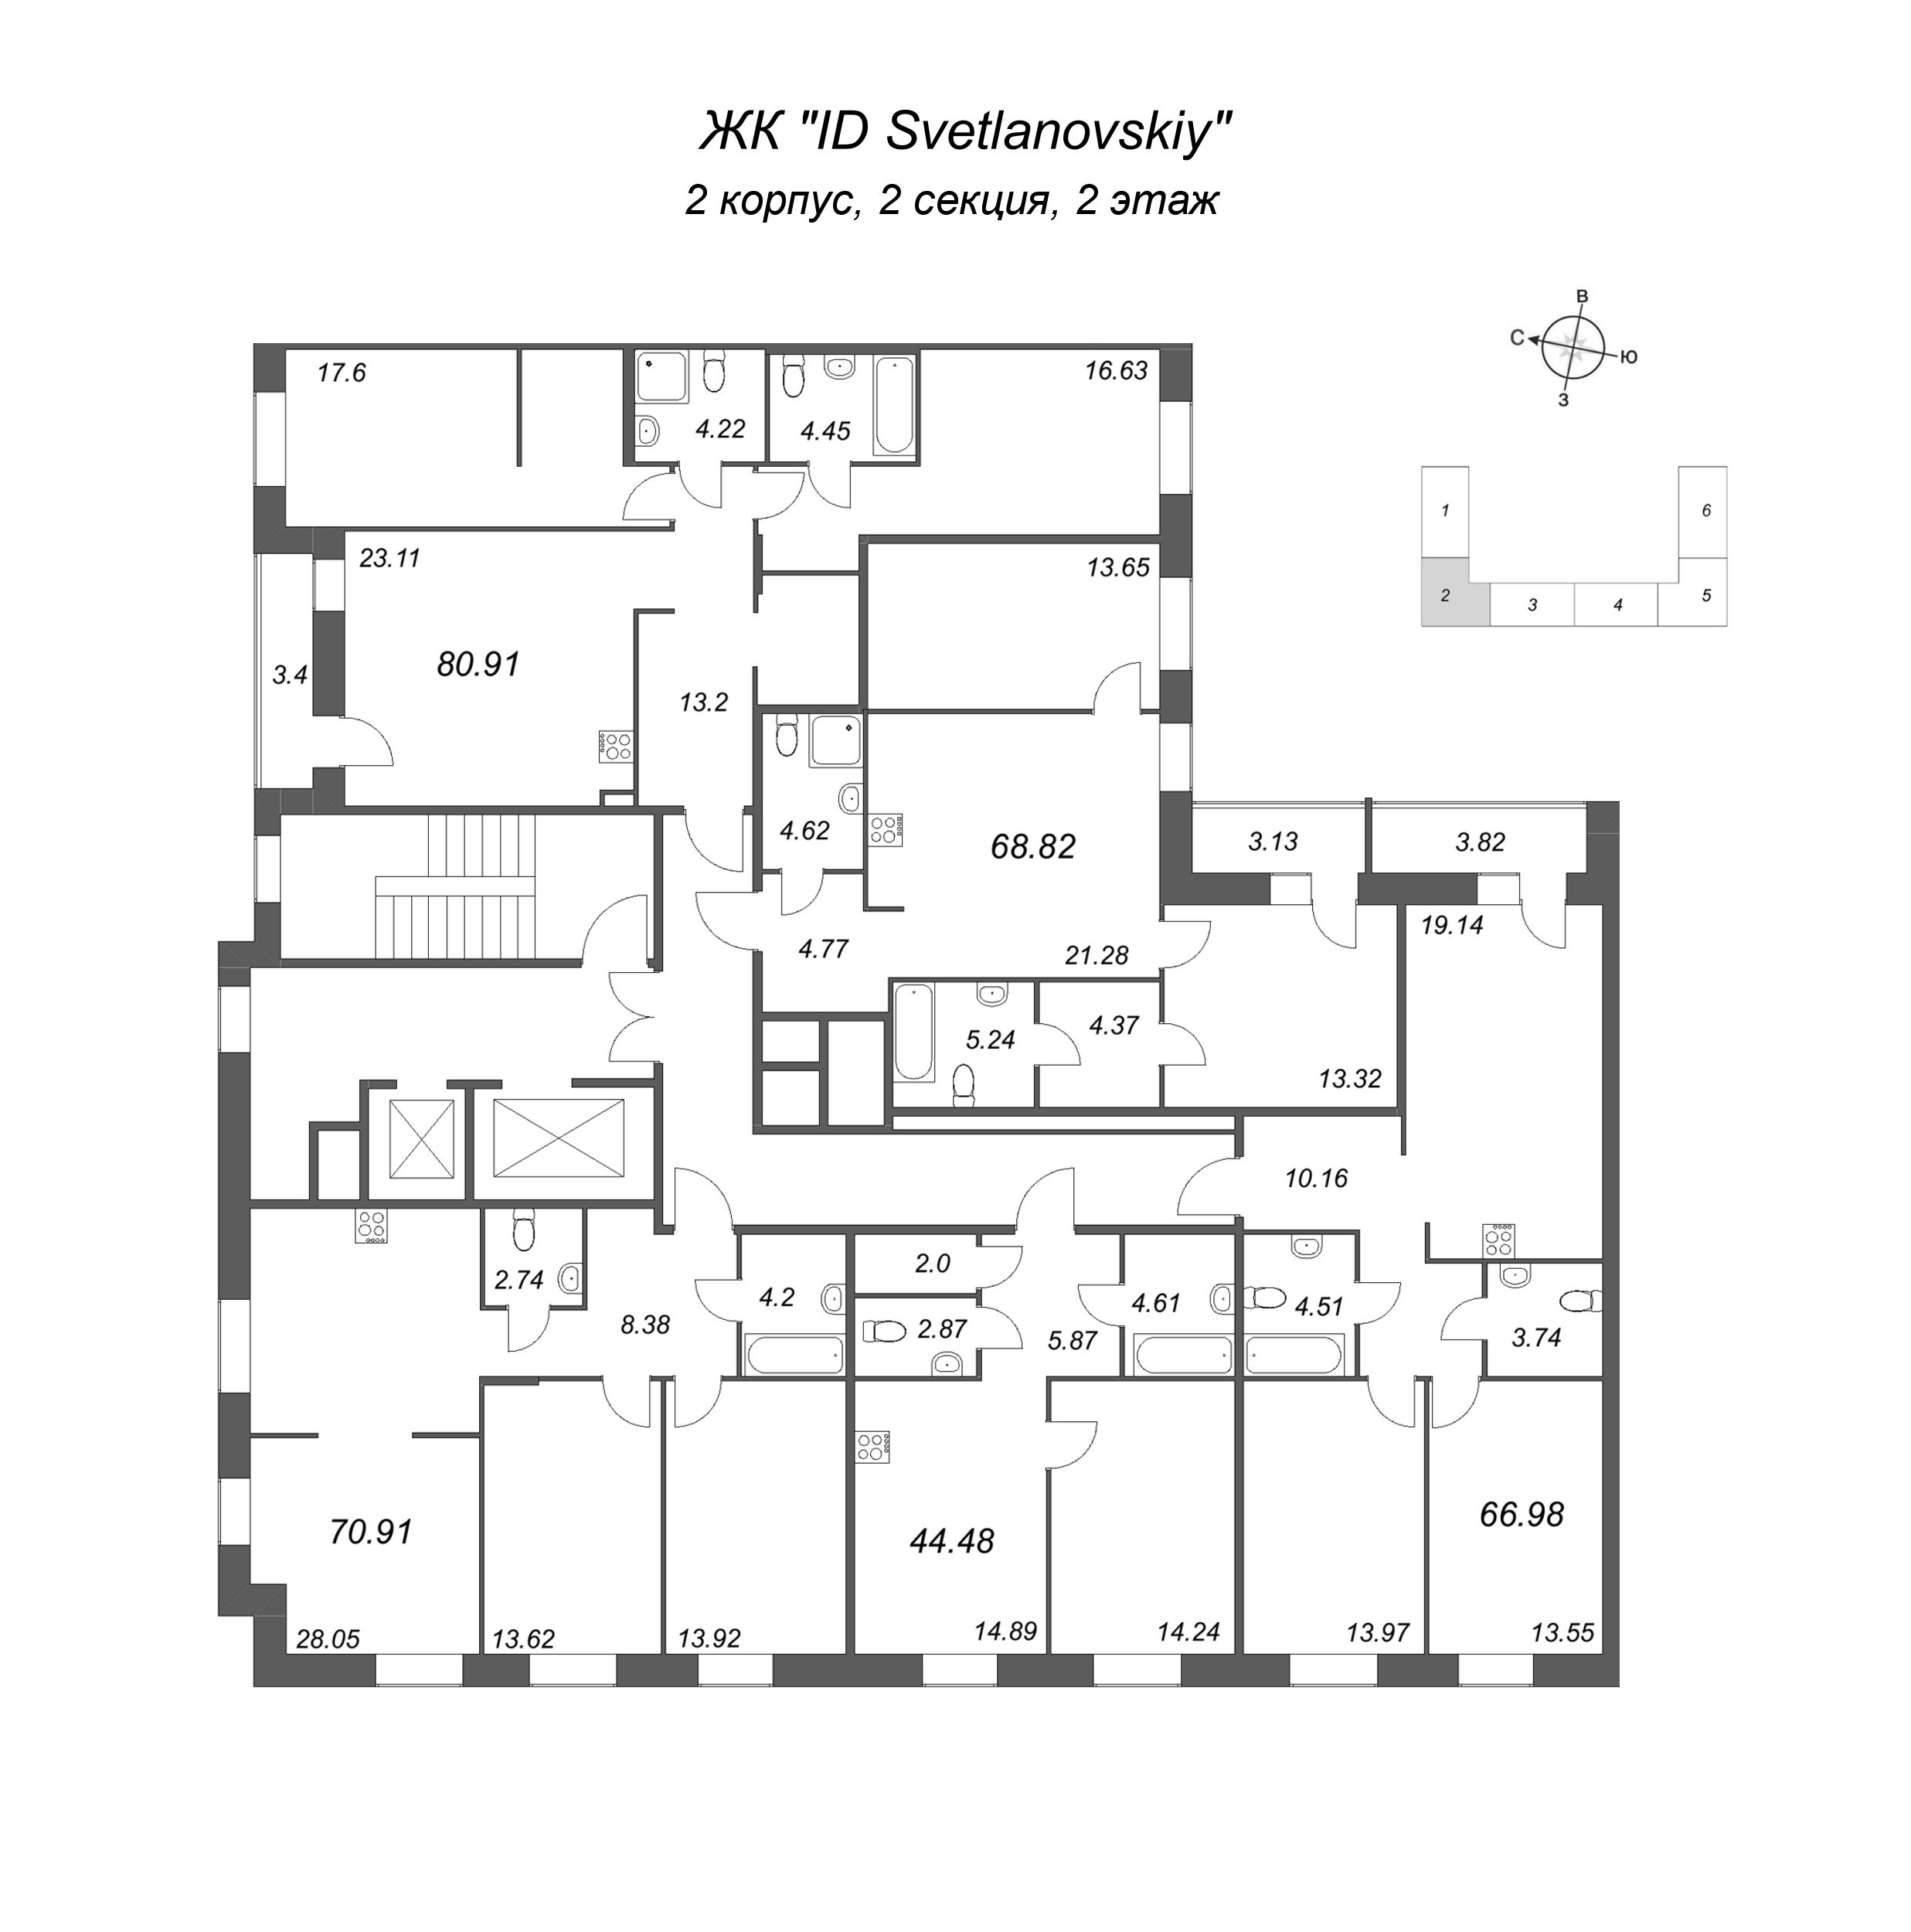 3-комнатная (Евро) квартира, 66.98 м² - планировка этажа